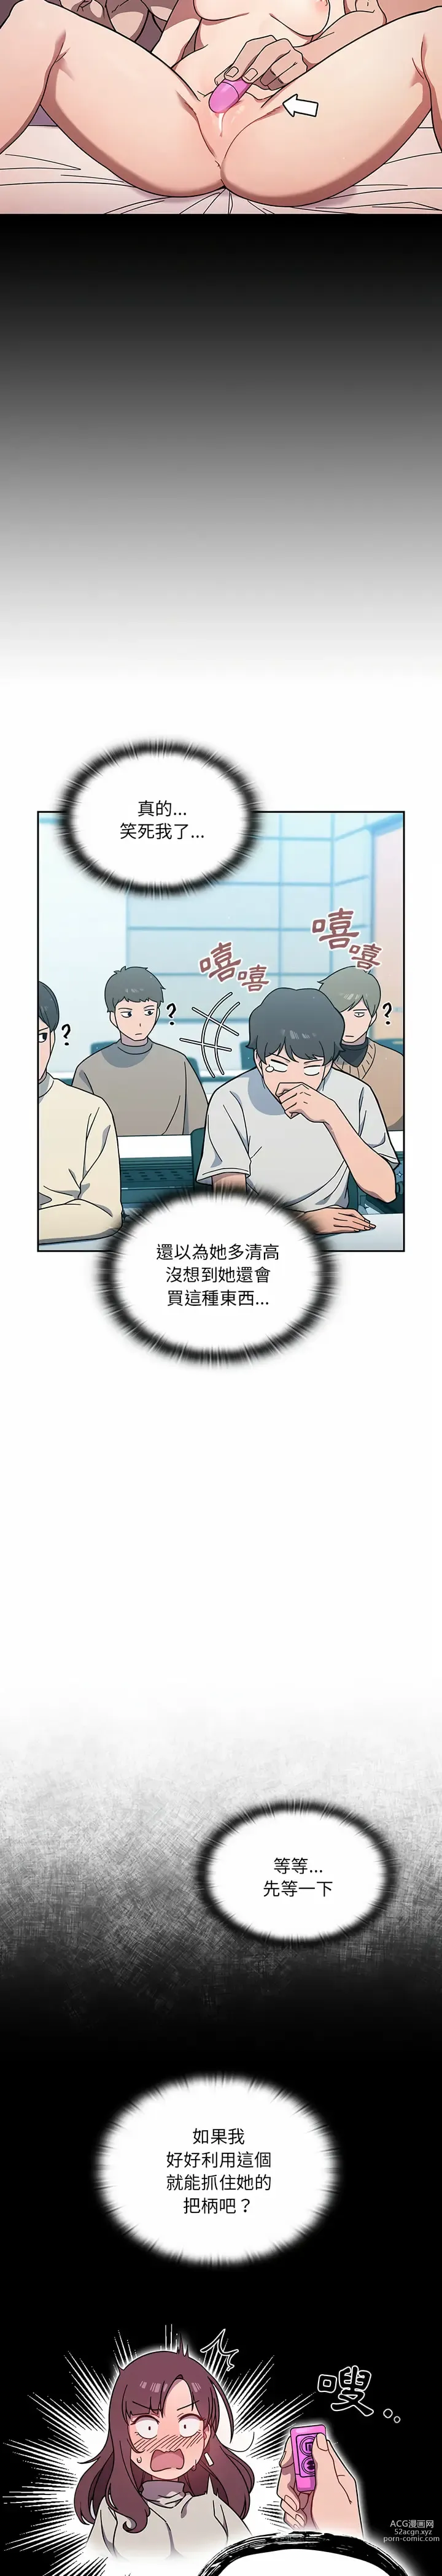 Page 21 of manga 調教開關 1-56 第一季 END